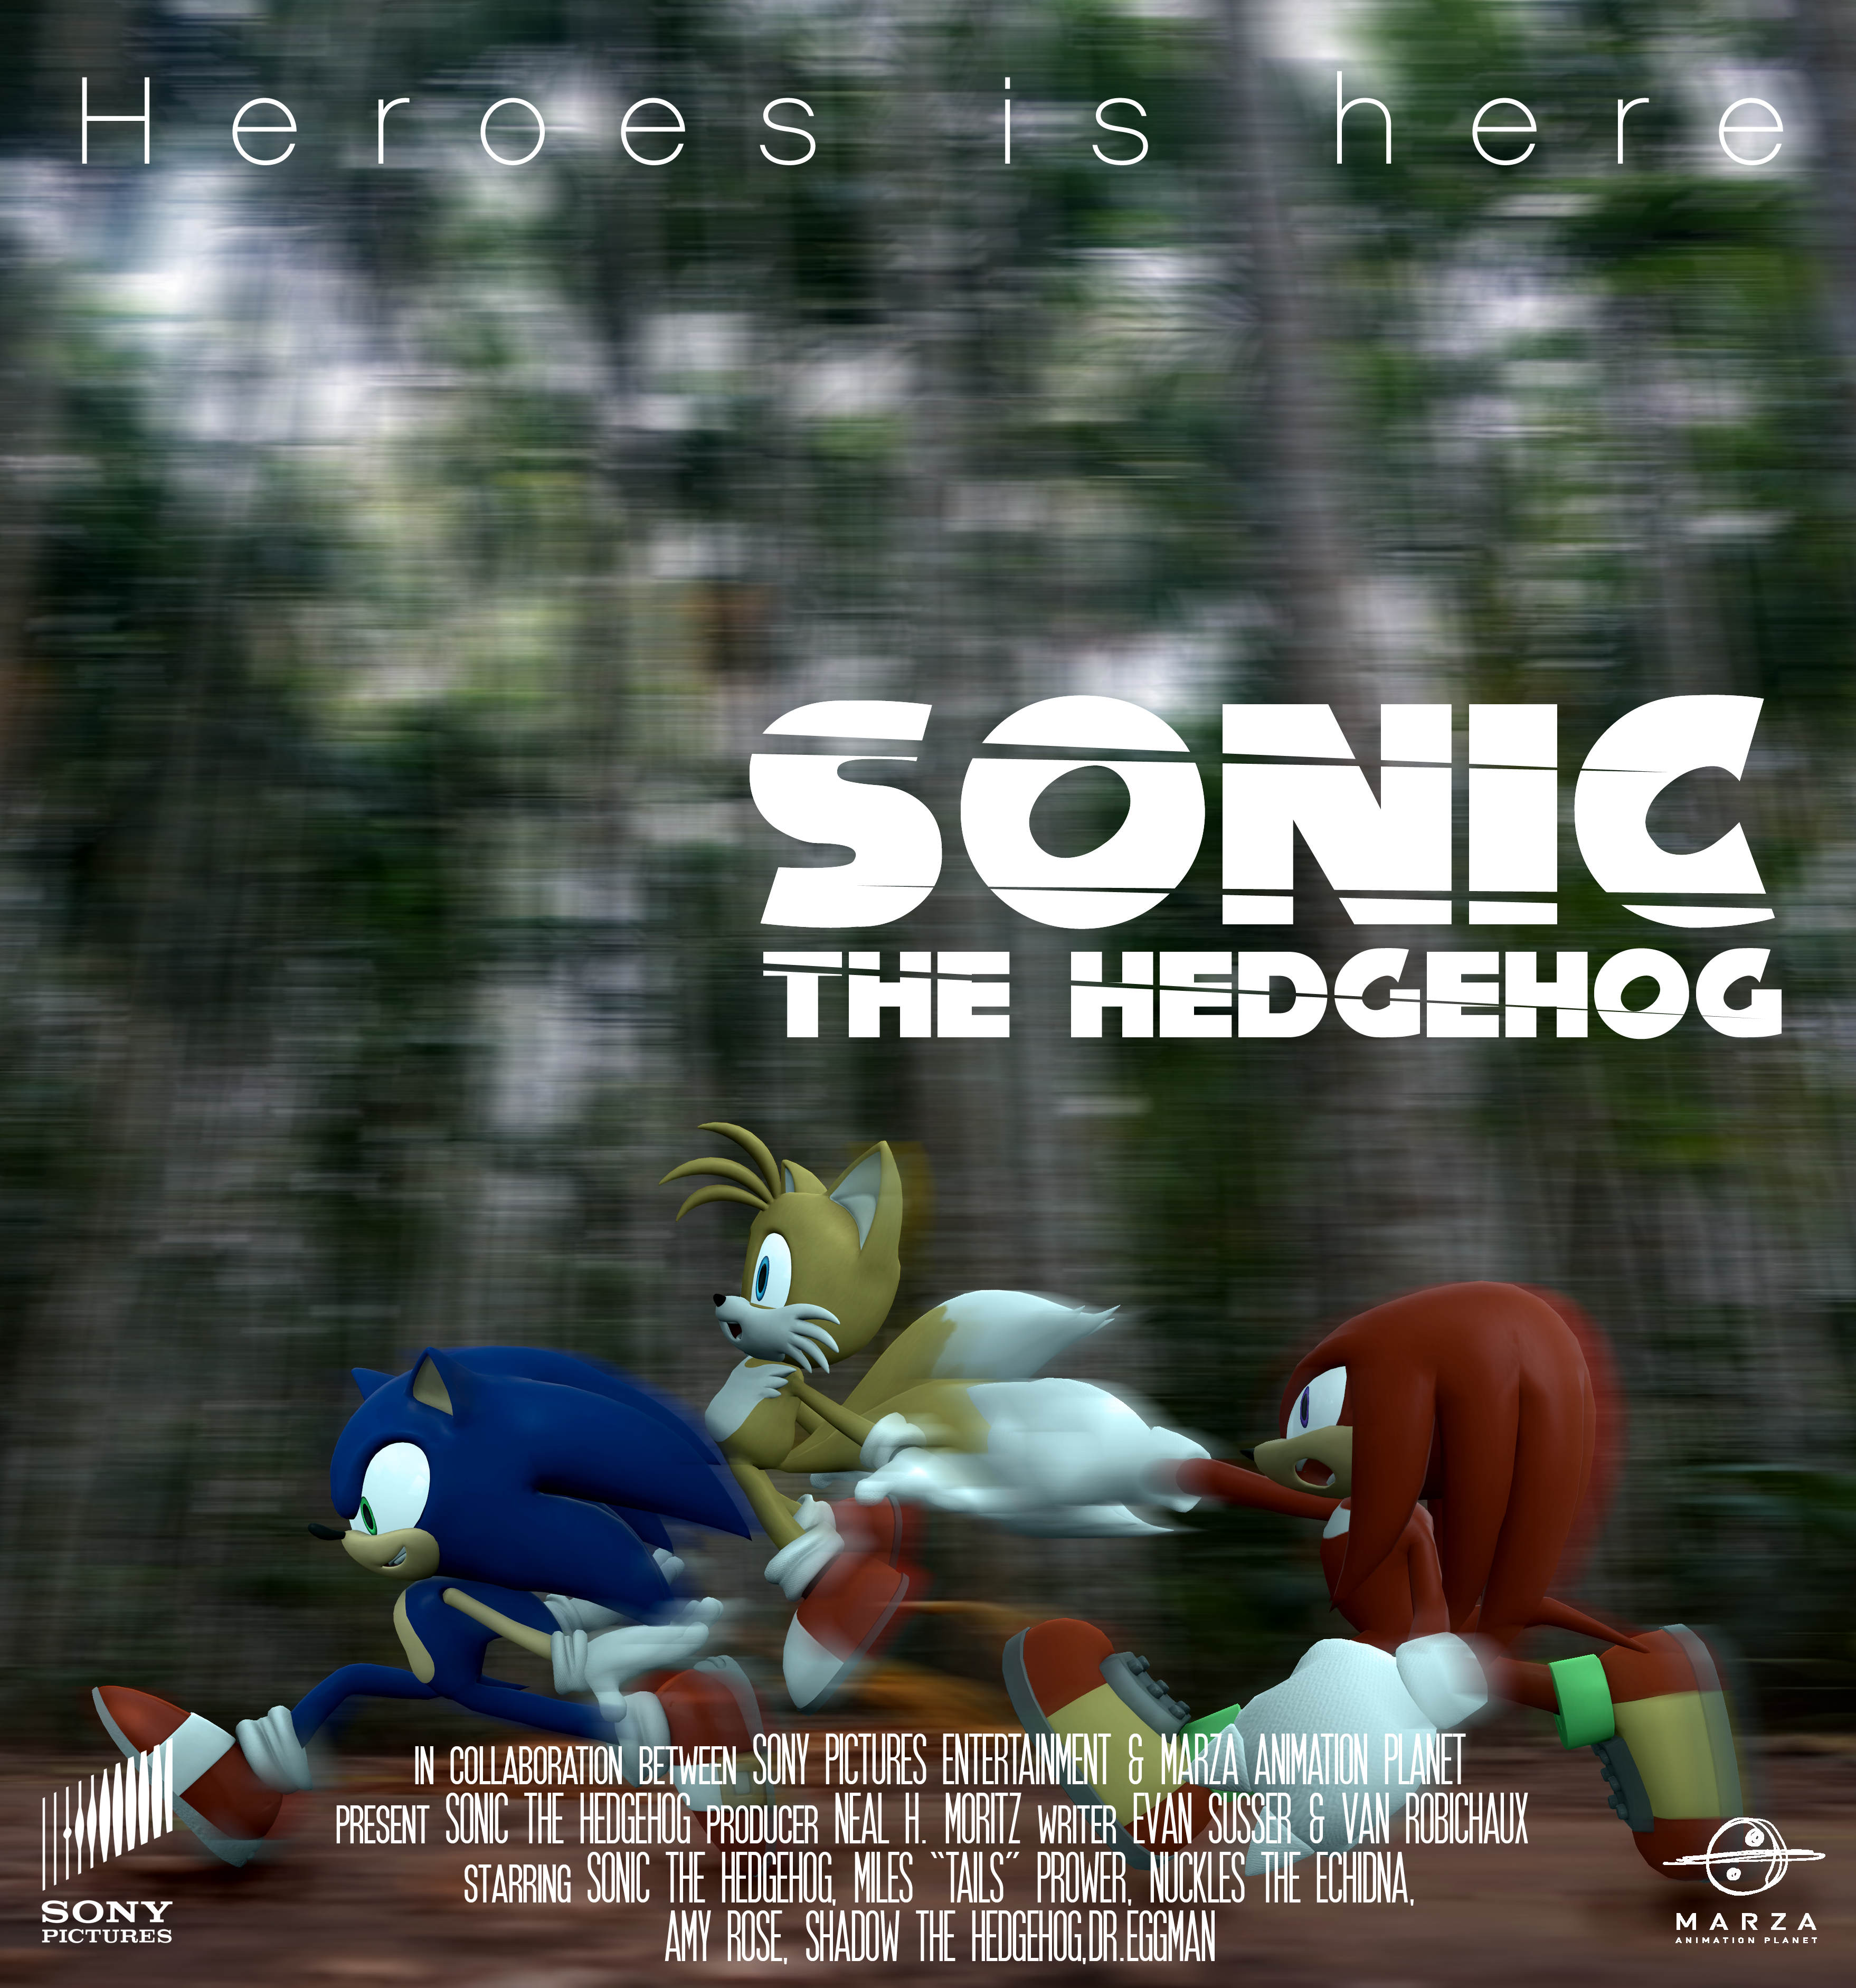 Sonic Movie 3 Poster by Mariorainbow6 on DeviantArt